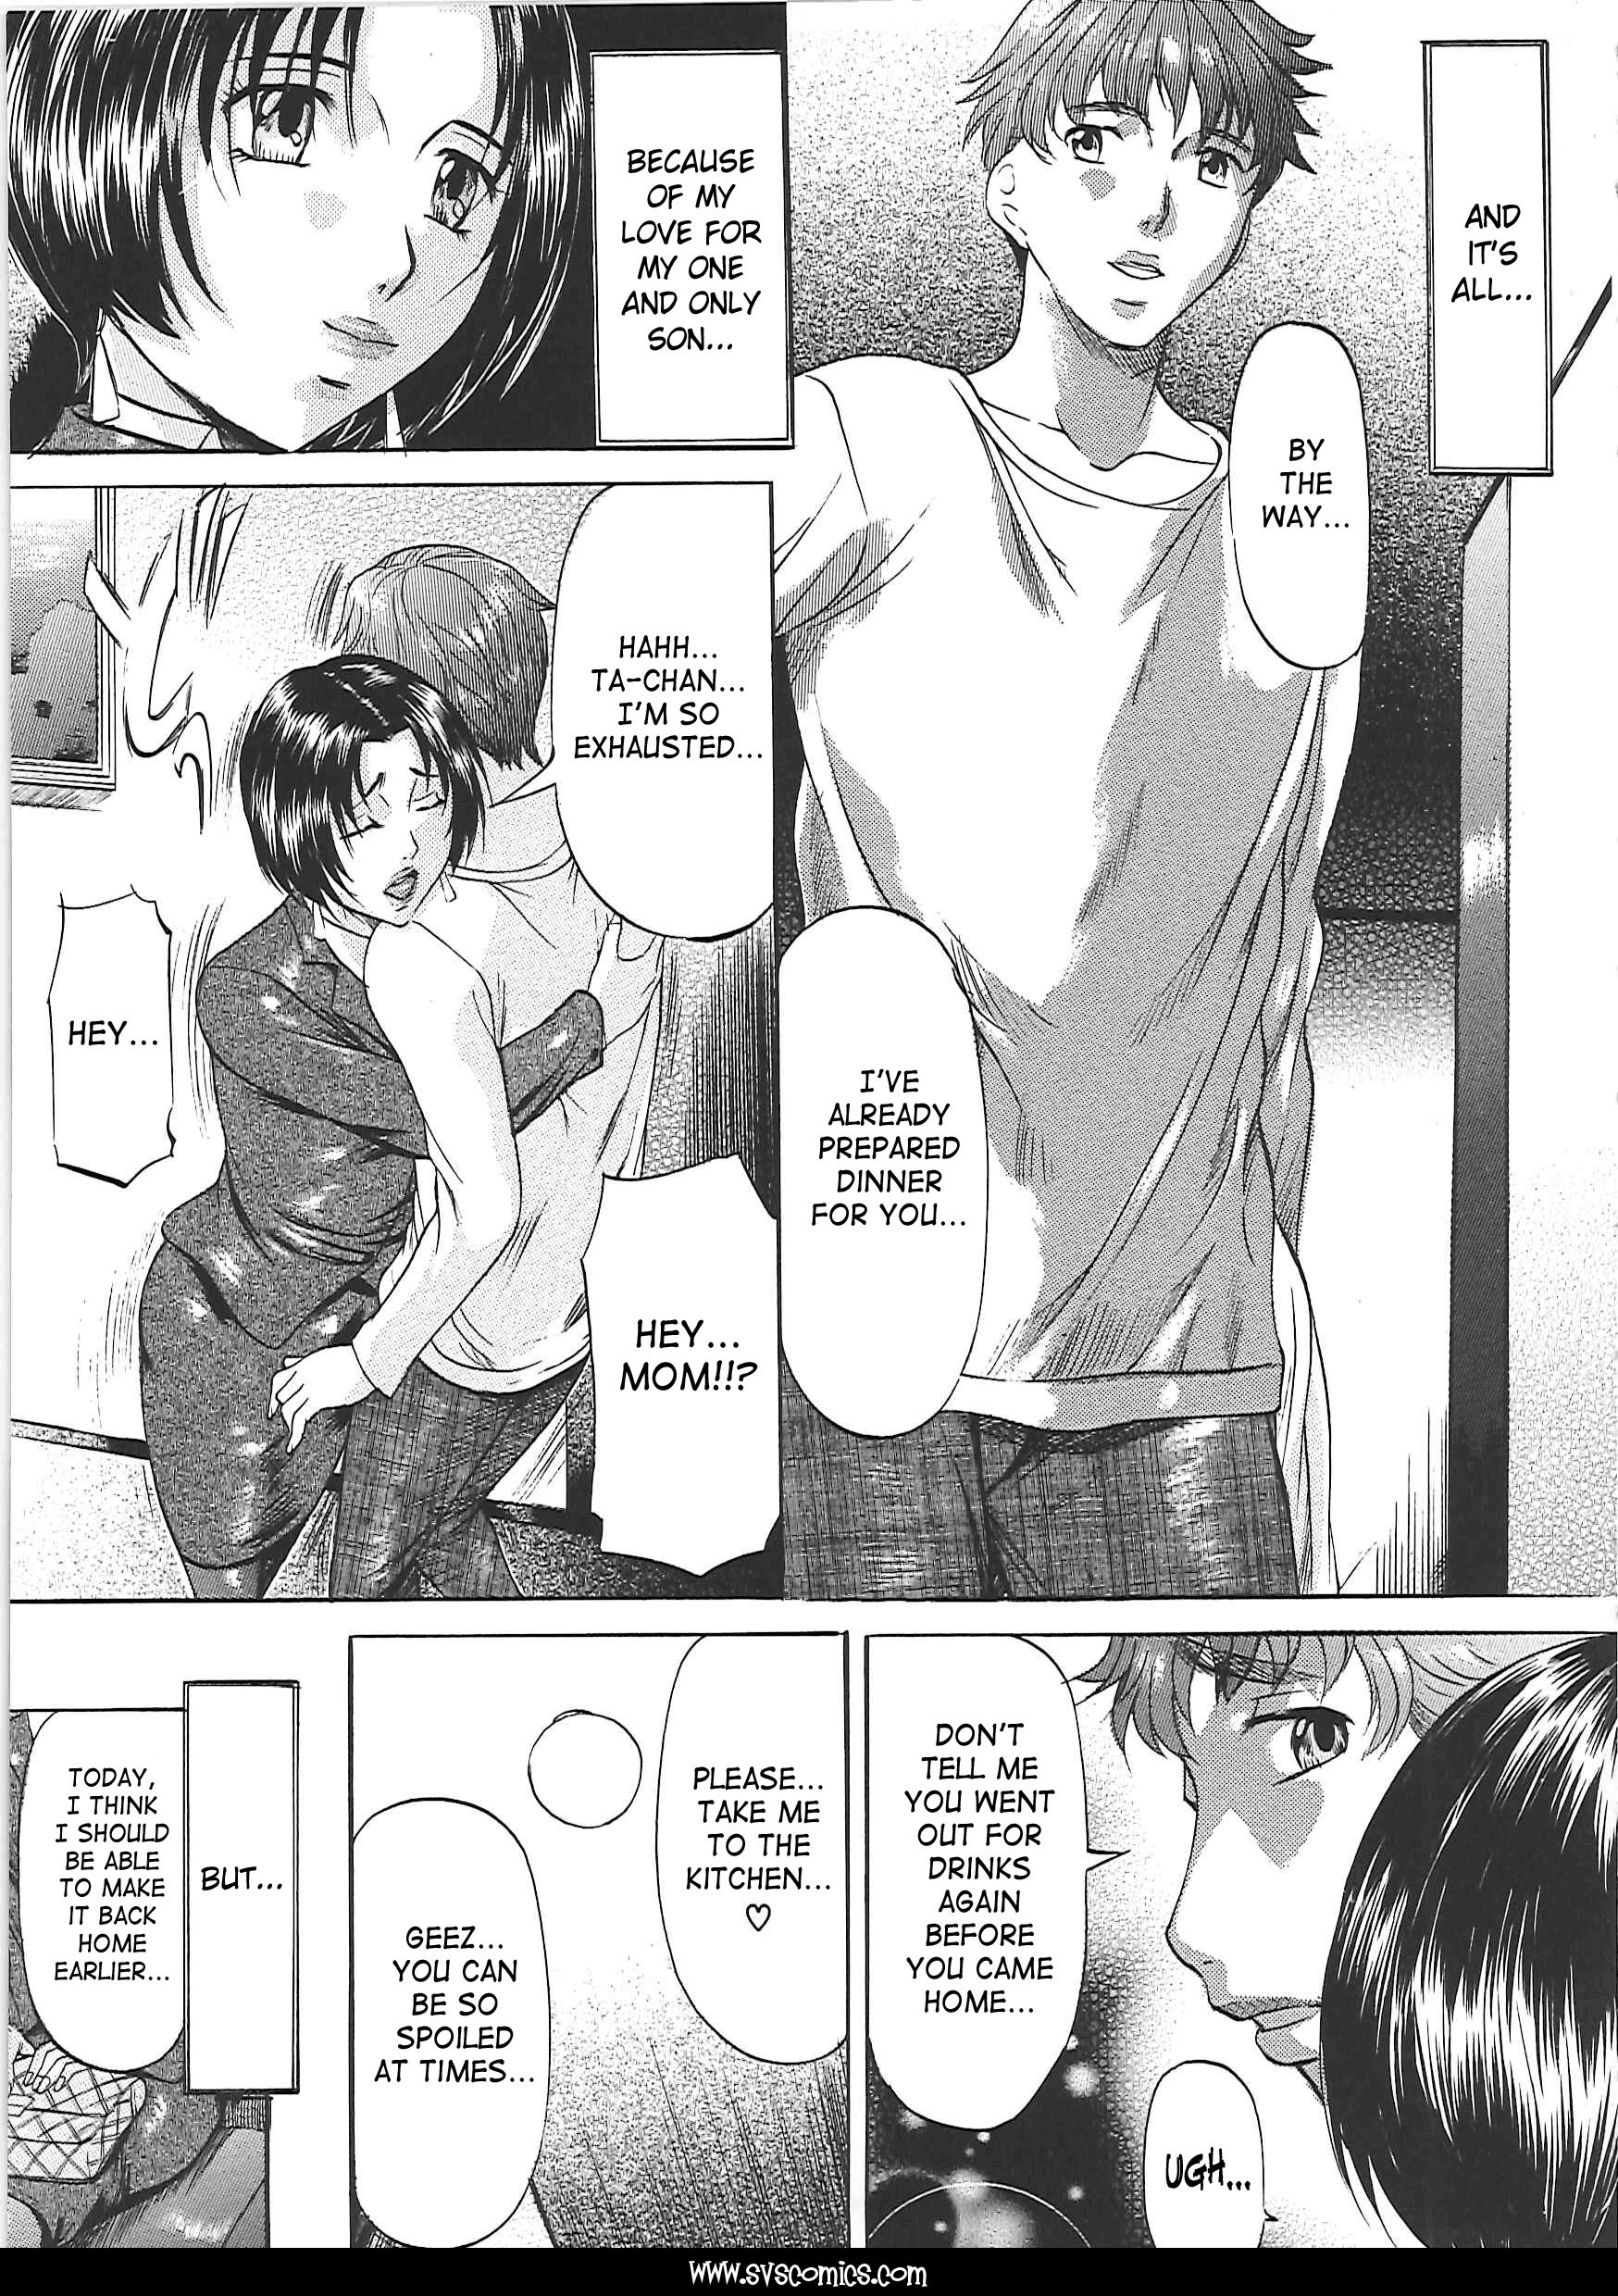 Manga Anime Porn - Manga Y Anime Porn image #180728